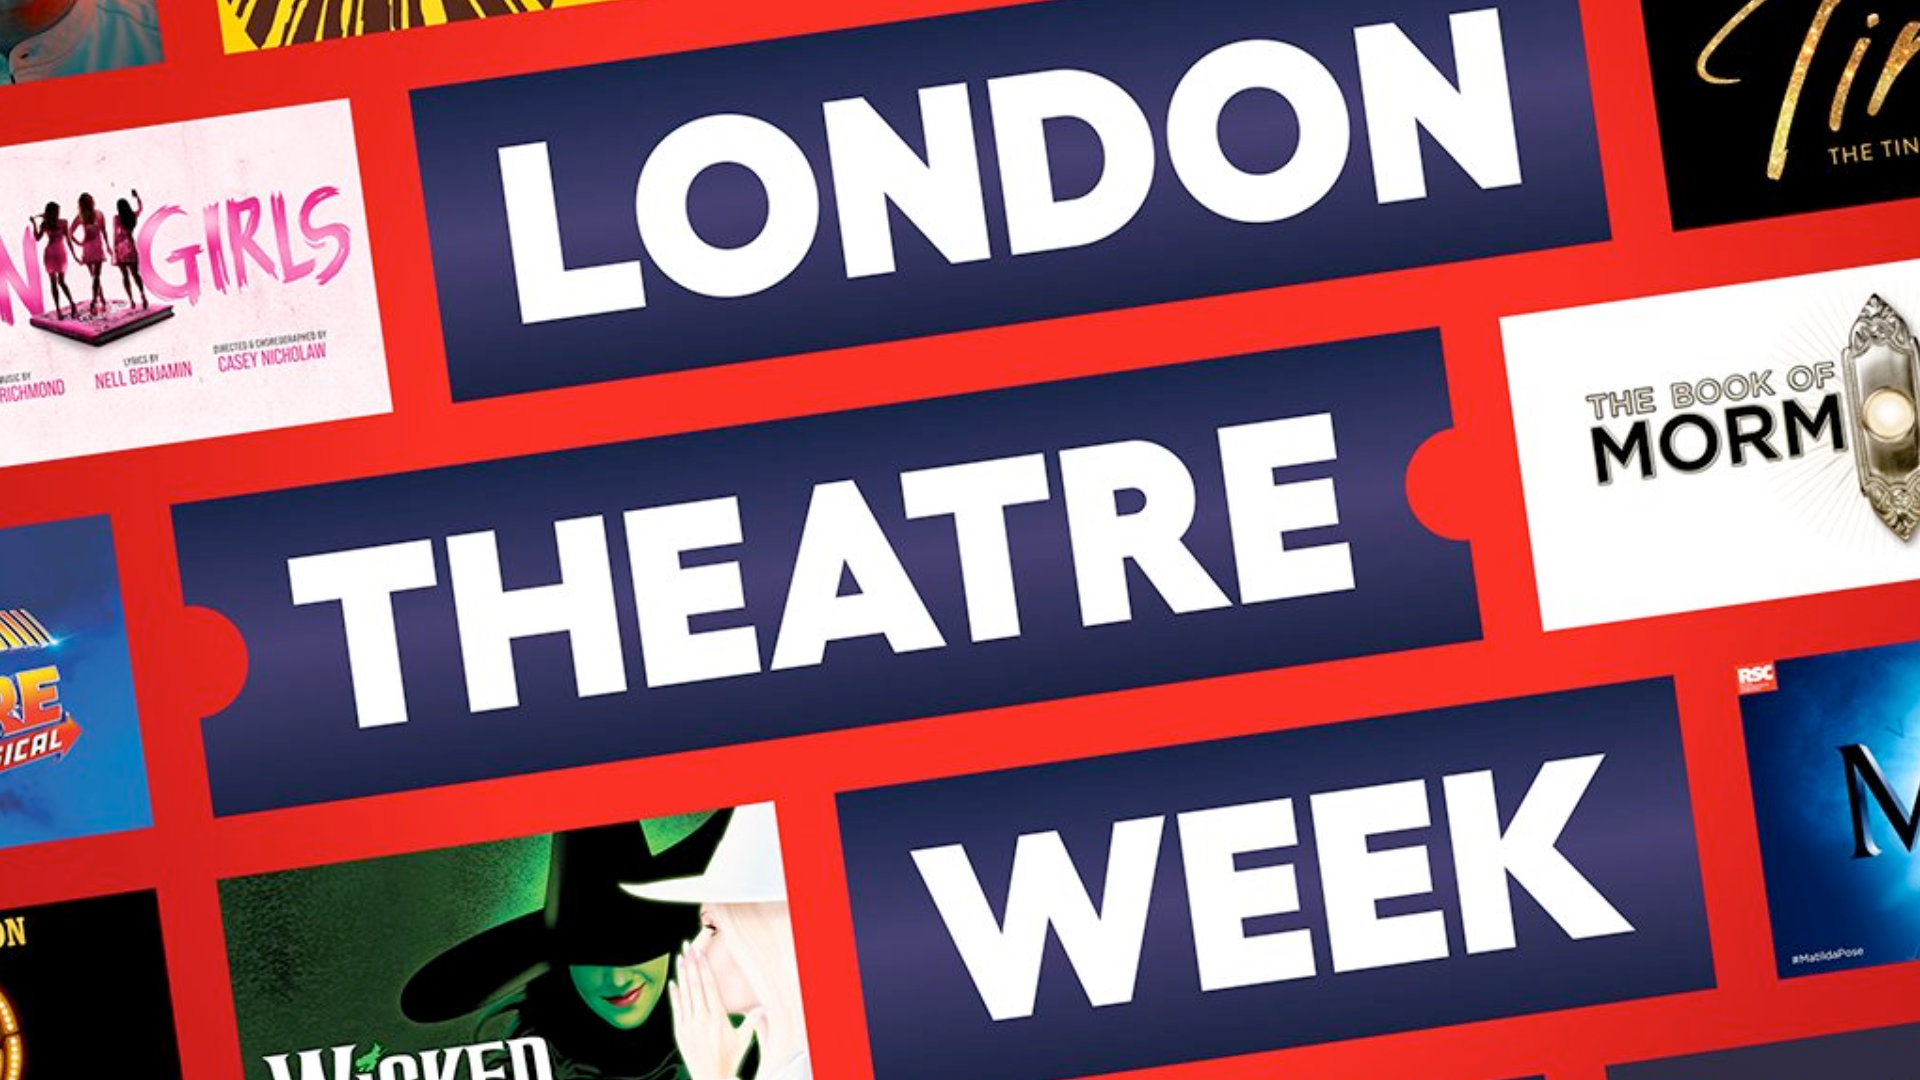 London Theatre Week